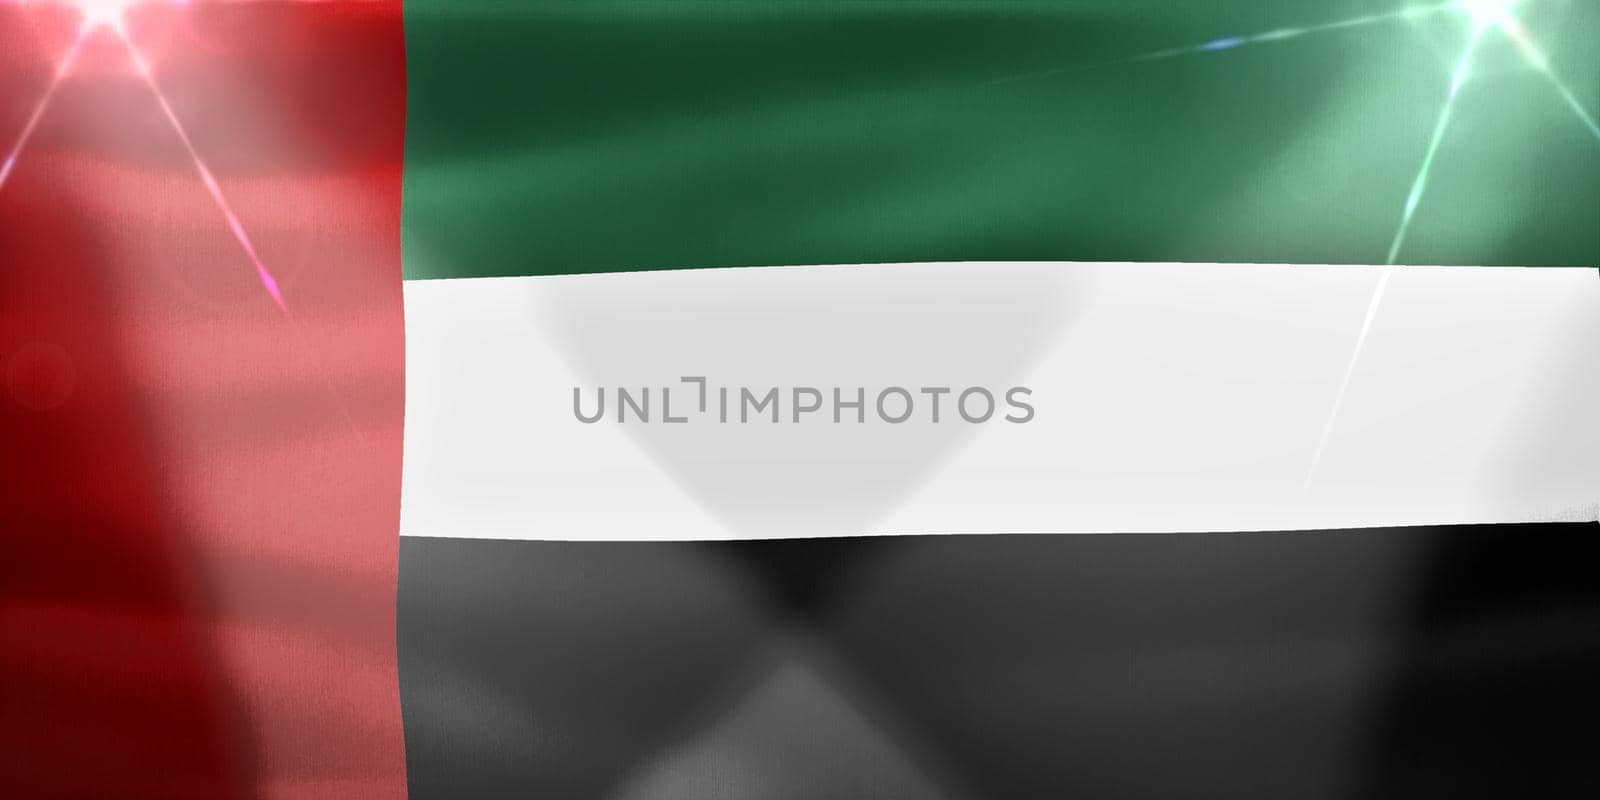 united arab emirates flag - realistic waving fabric flag